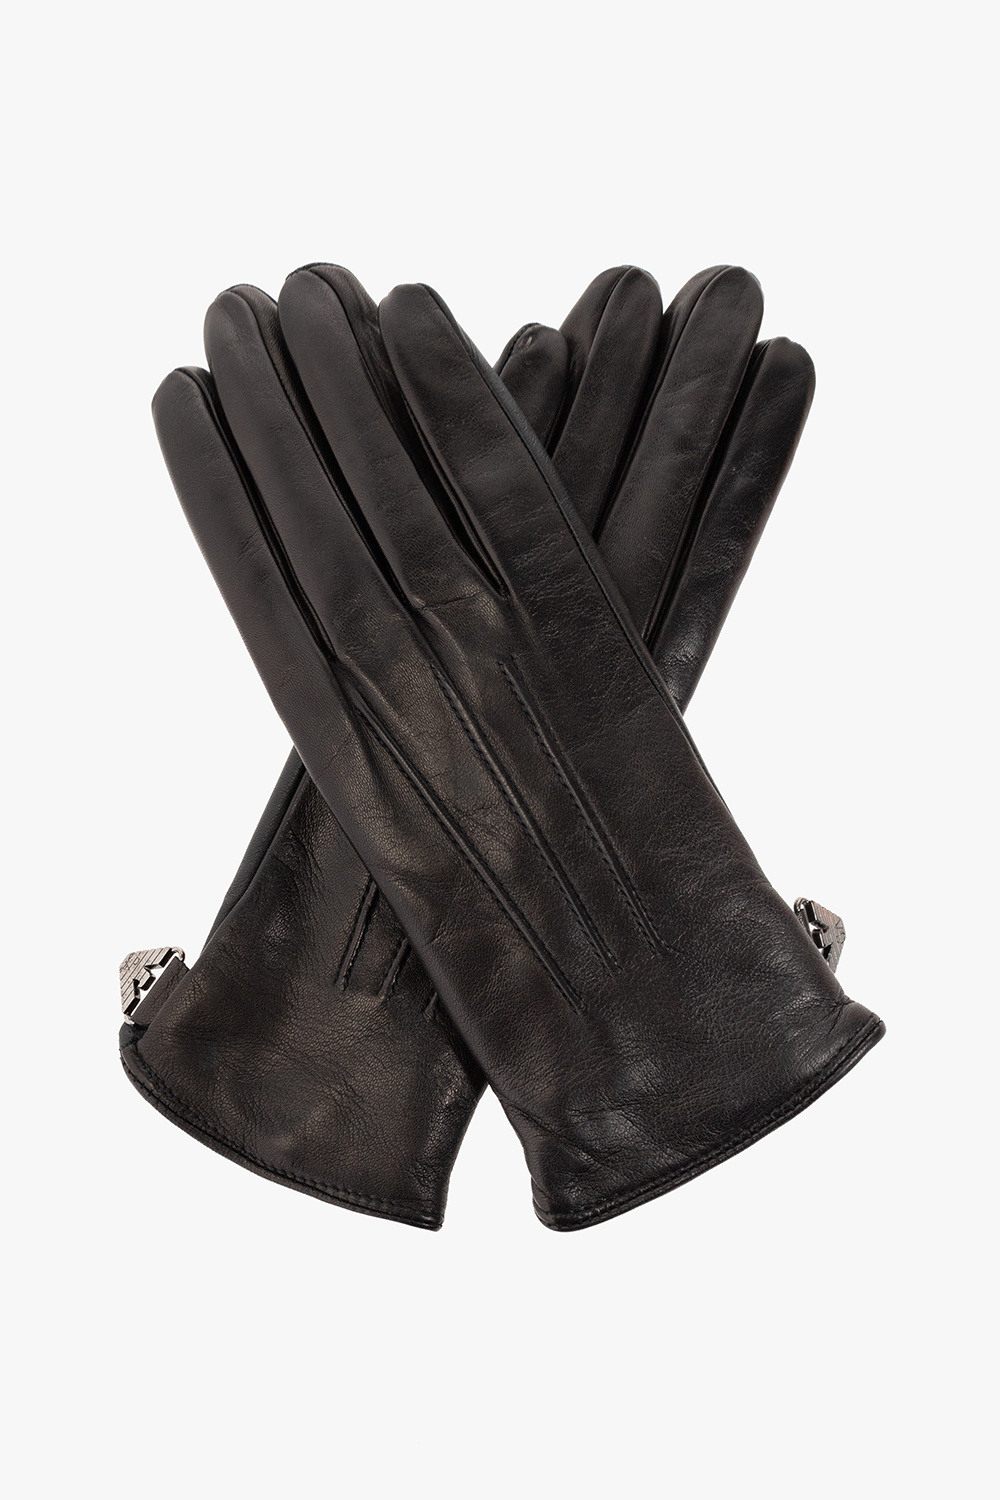 Emporio ar11383 armani Leather gloves